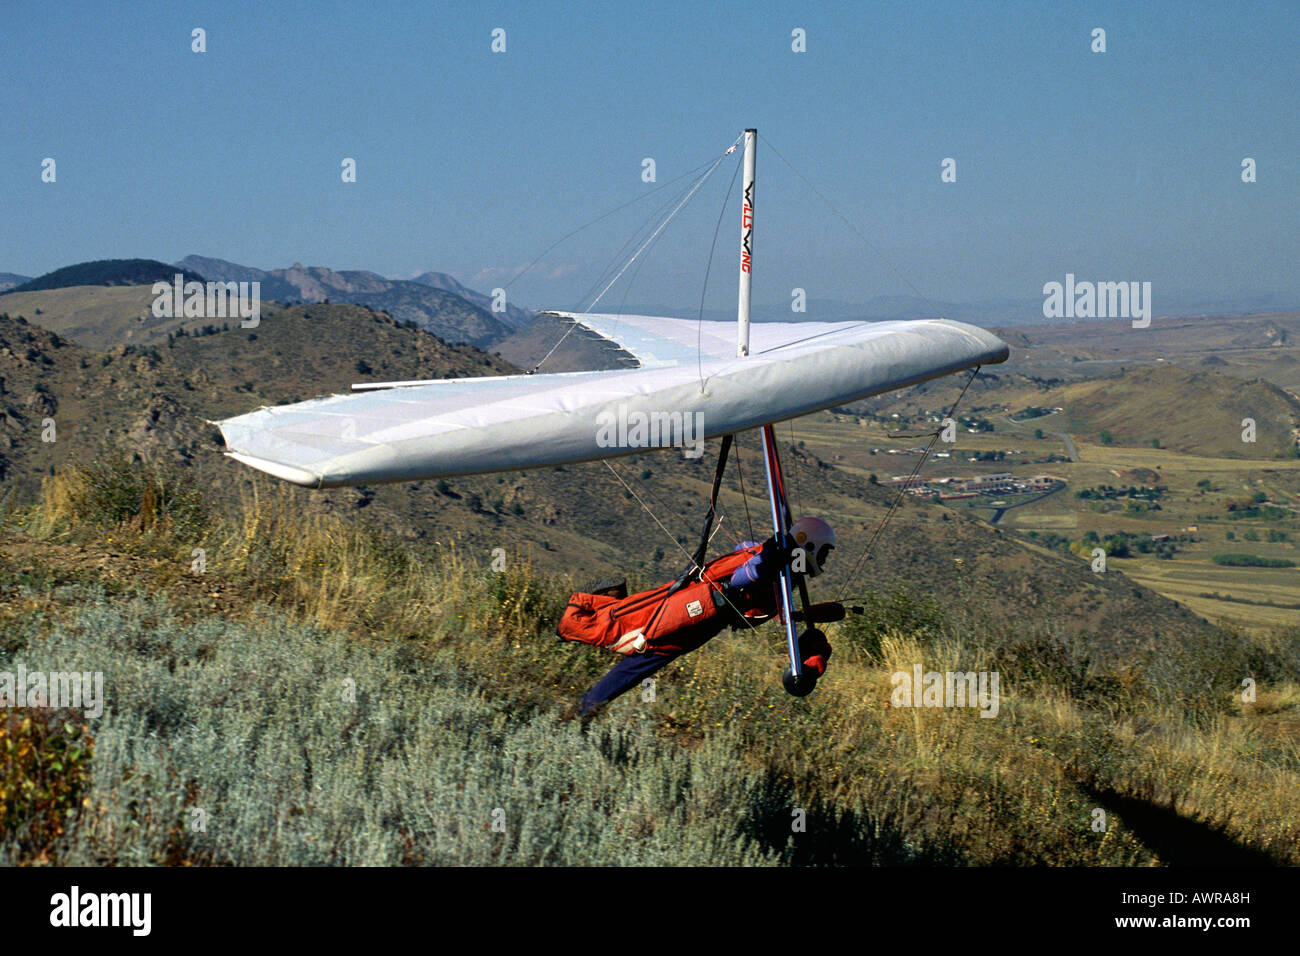 Hang Glider Stock Photo